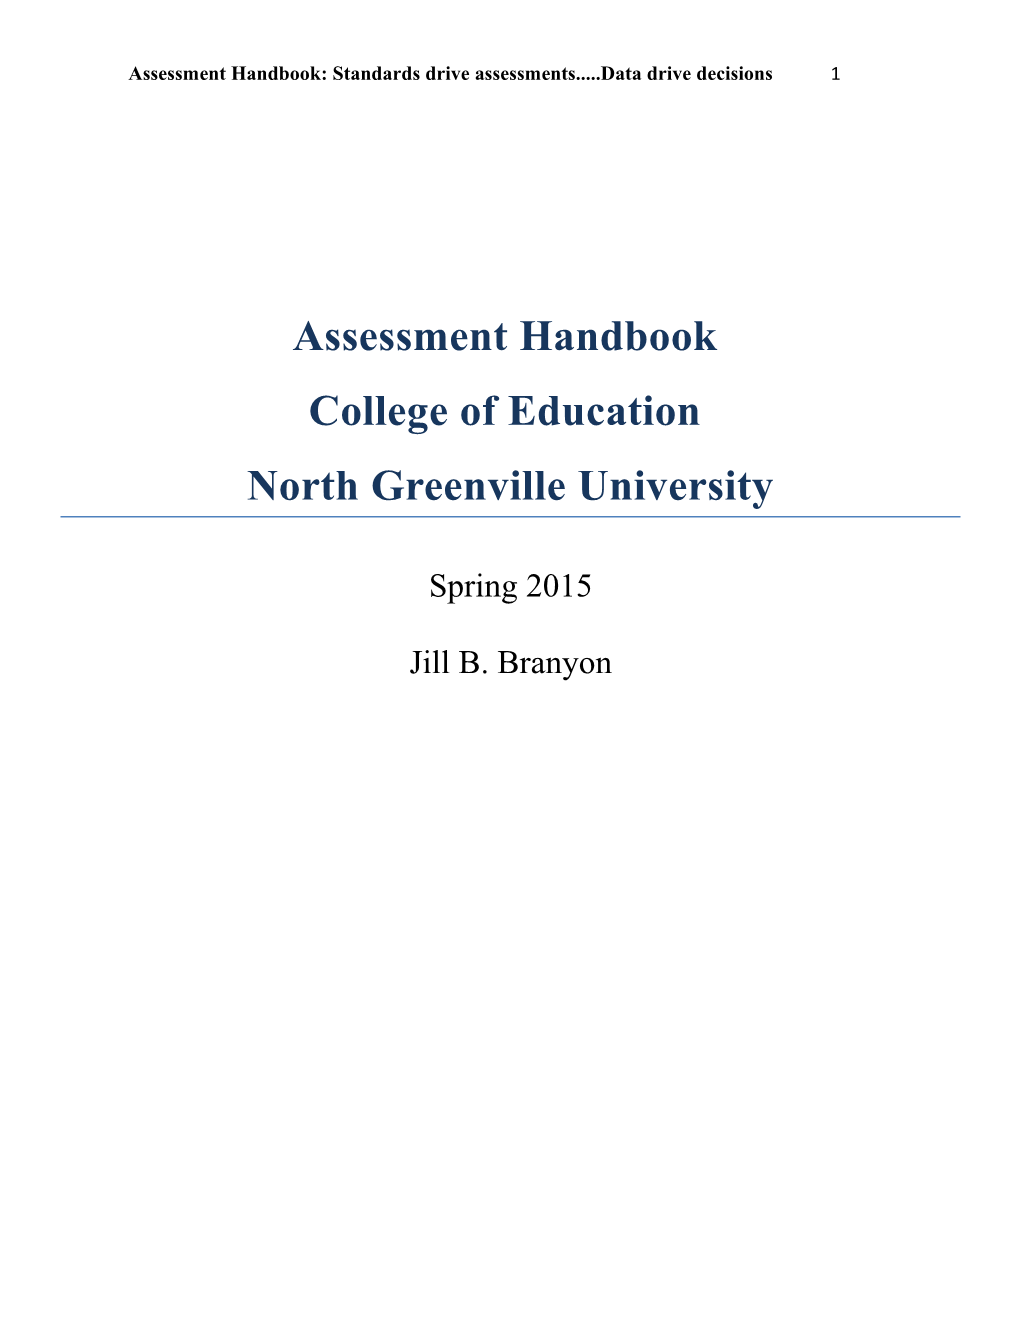 Assessment Handbook: Standards Drive Assessments Data Drive Decisions 1